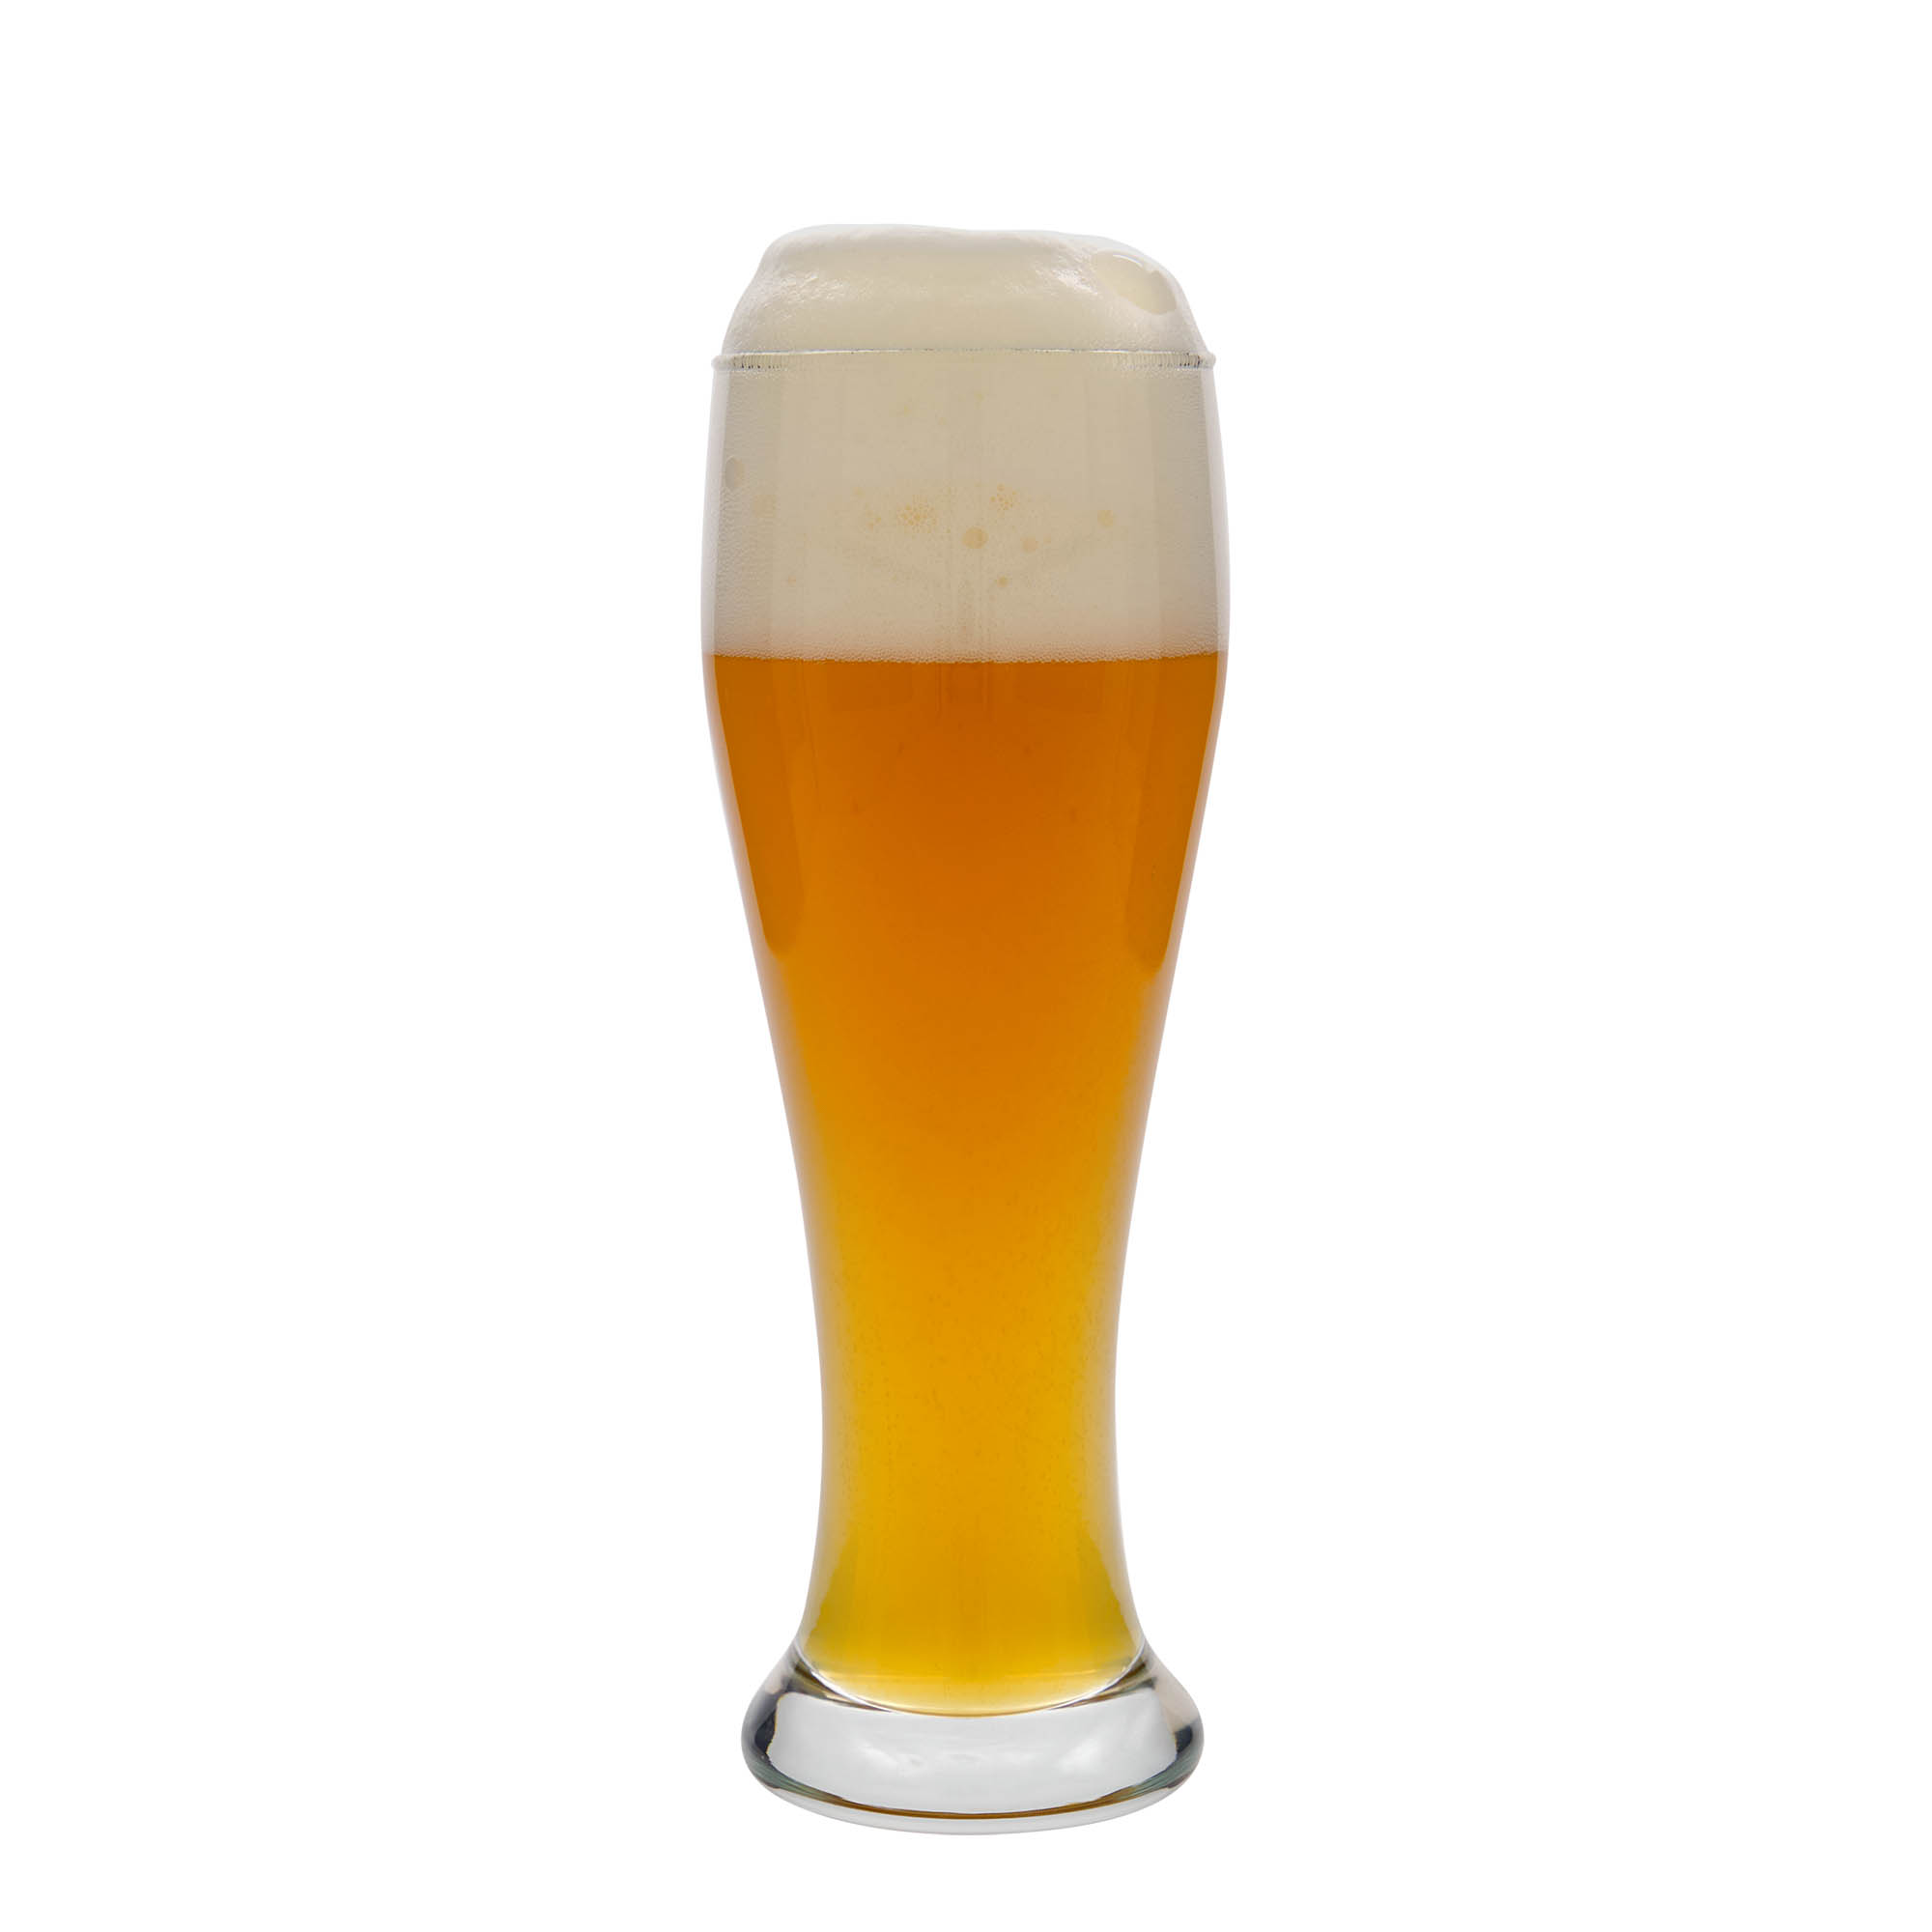 500 ml beer glass 'Ranft', glass